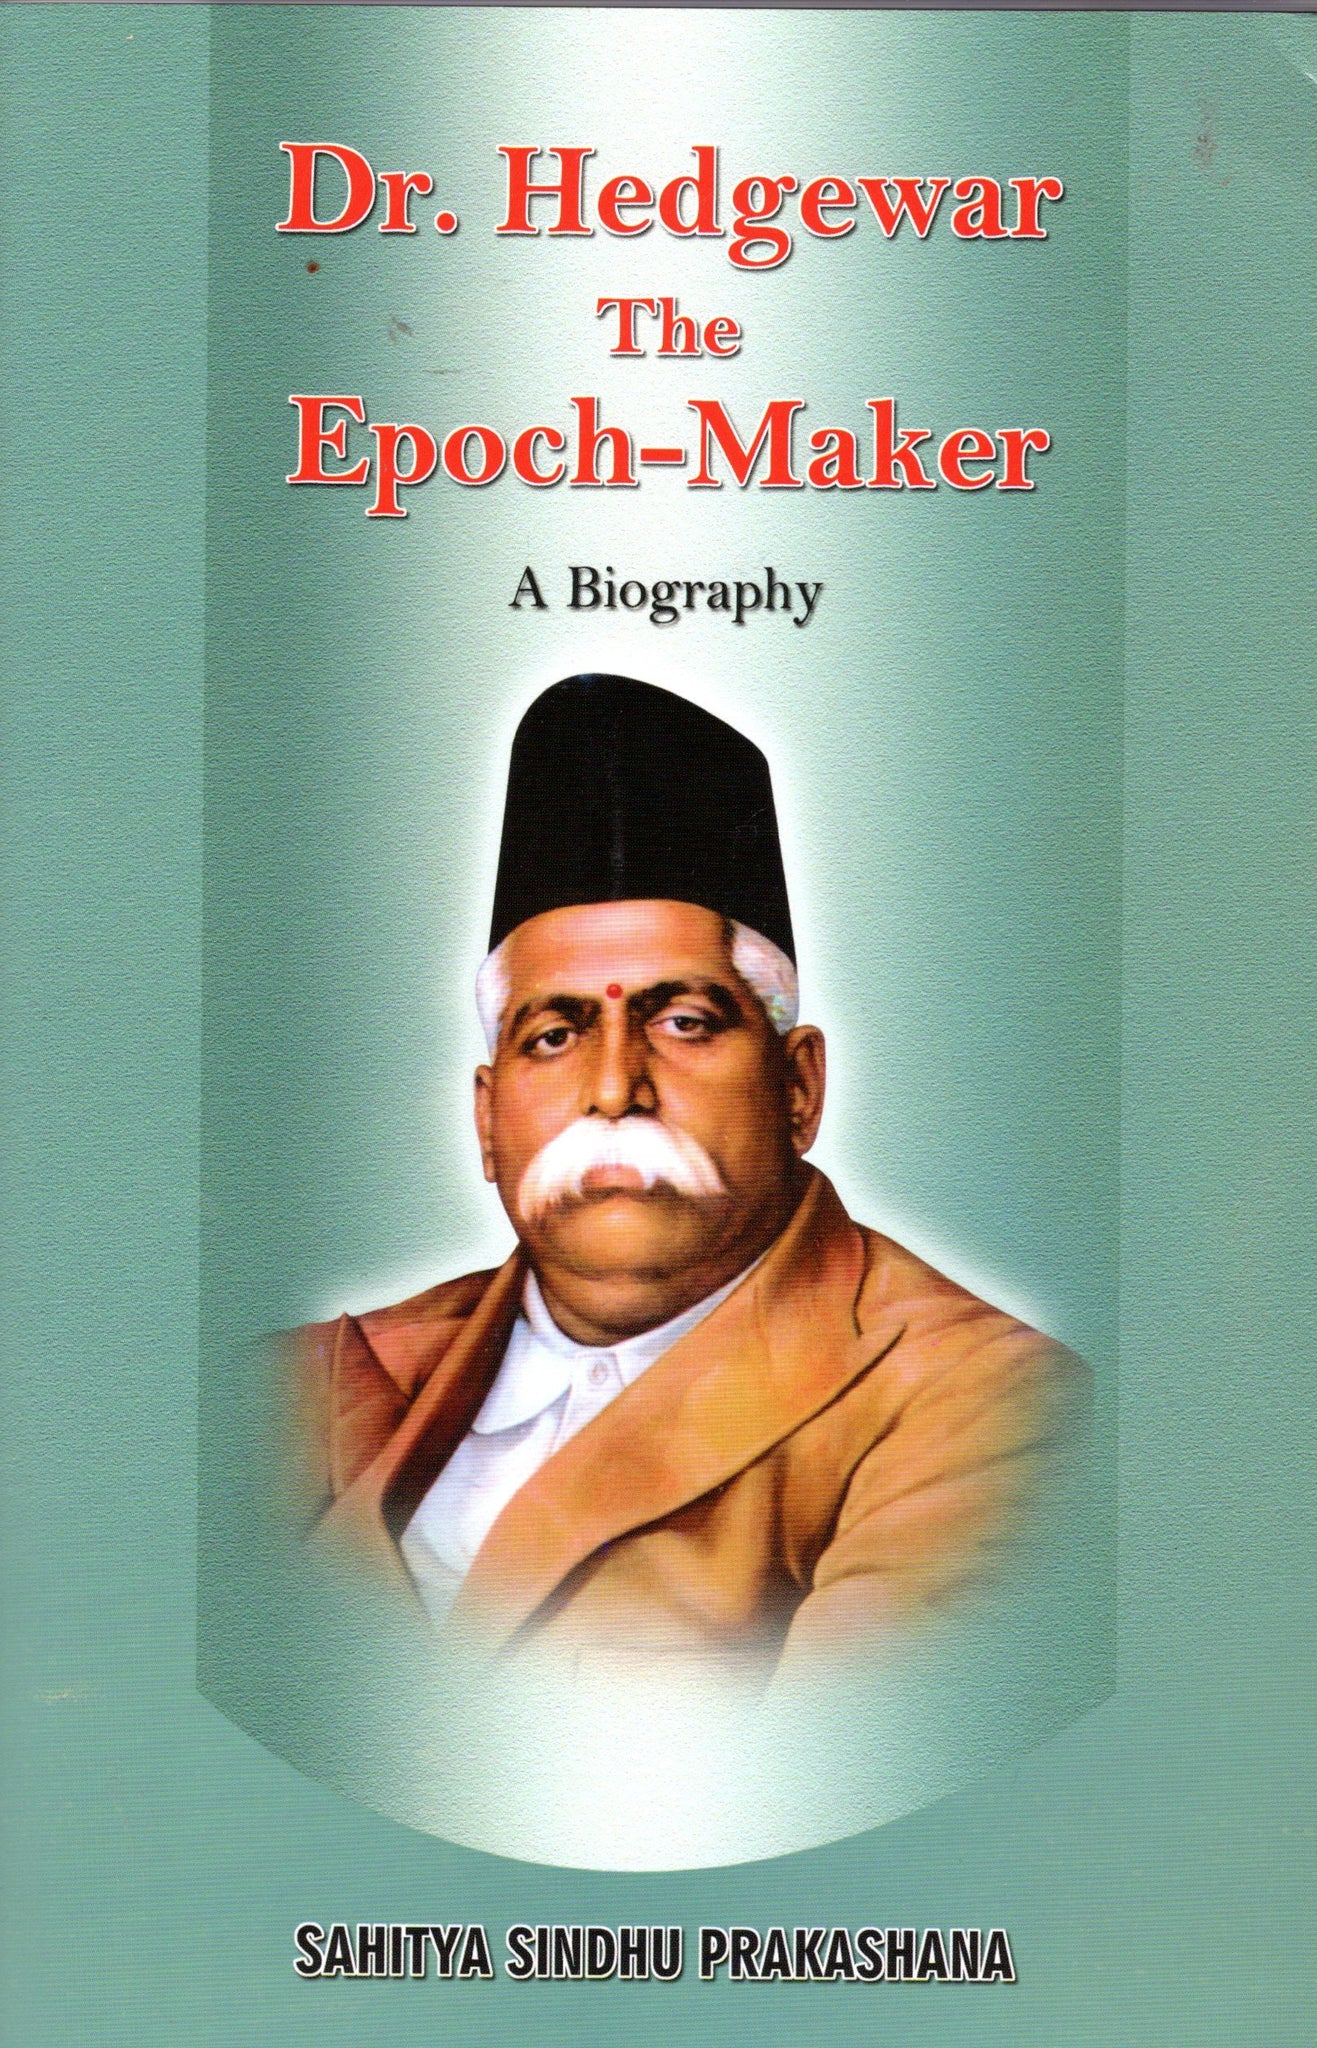 Dr. Hedgewar The Epoch - Maker - A Biography